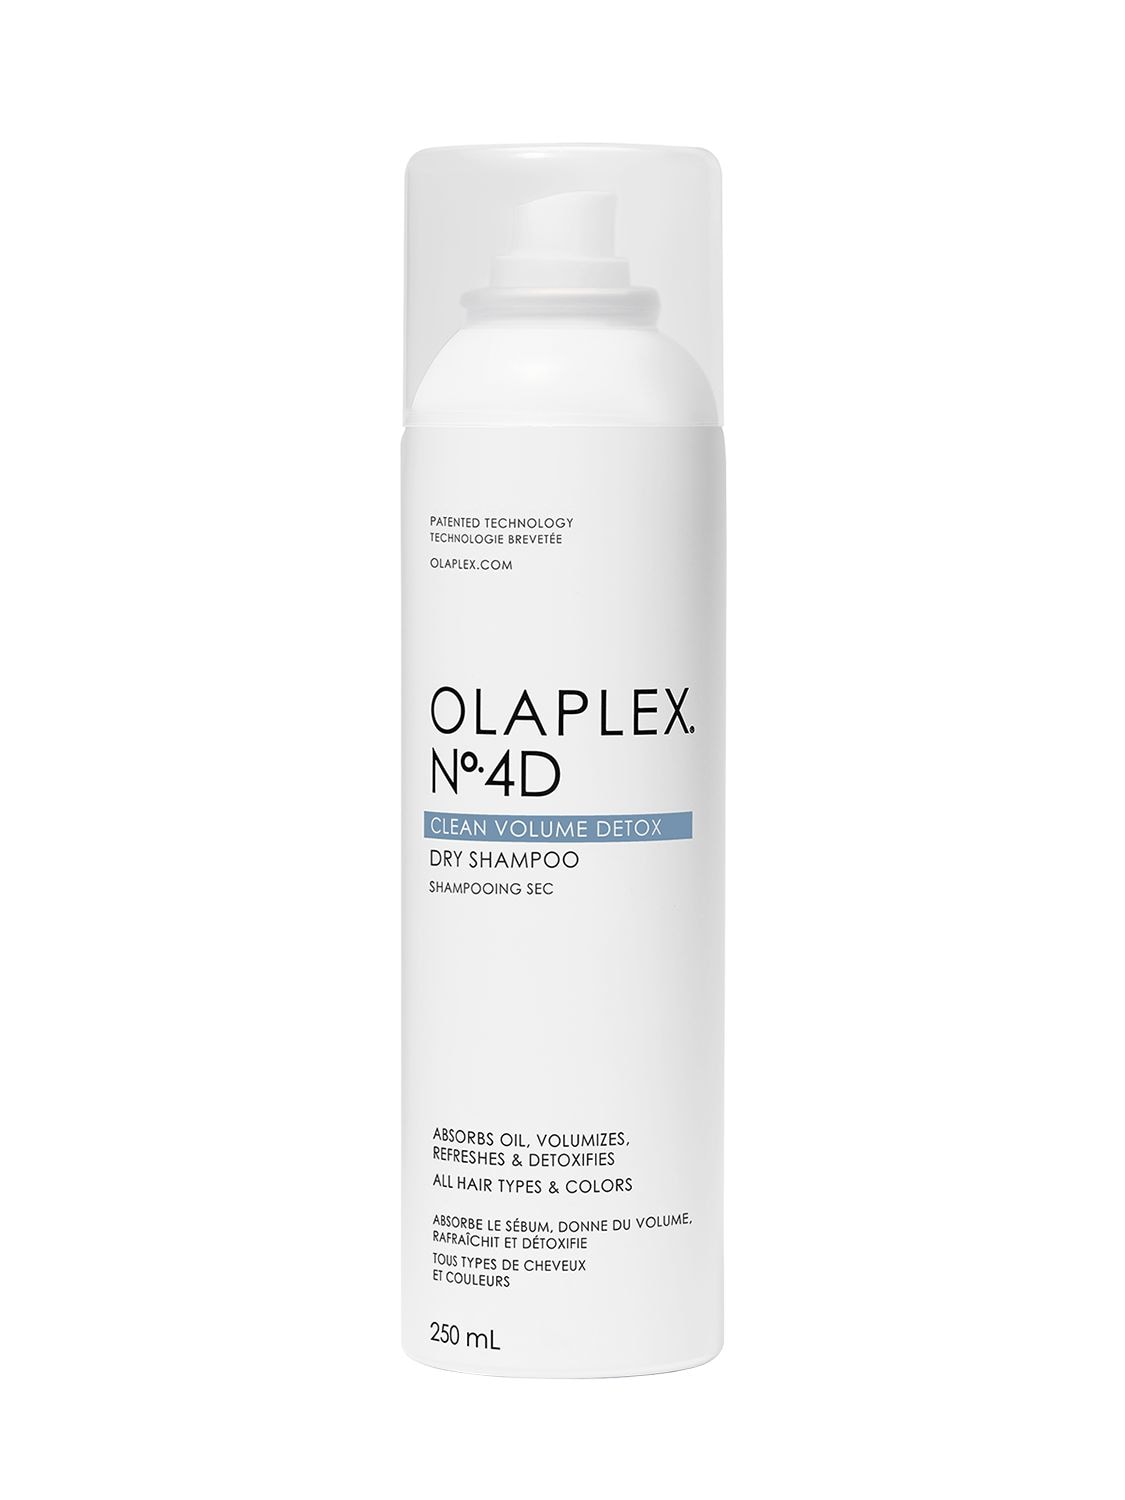 Image of No. 4d Clean Volume Detox Dry Shampoo